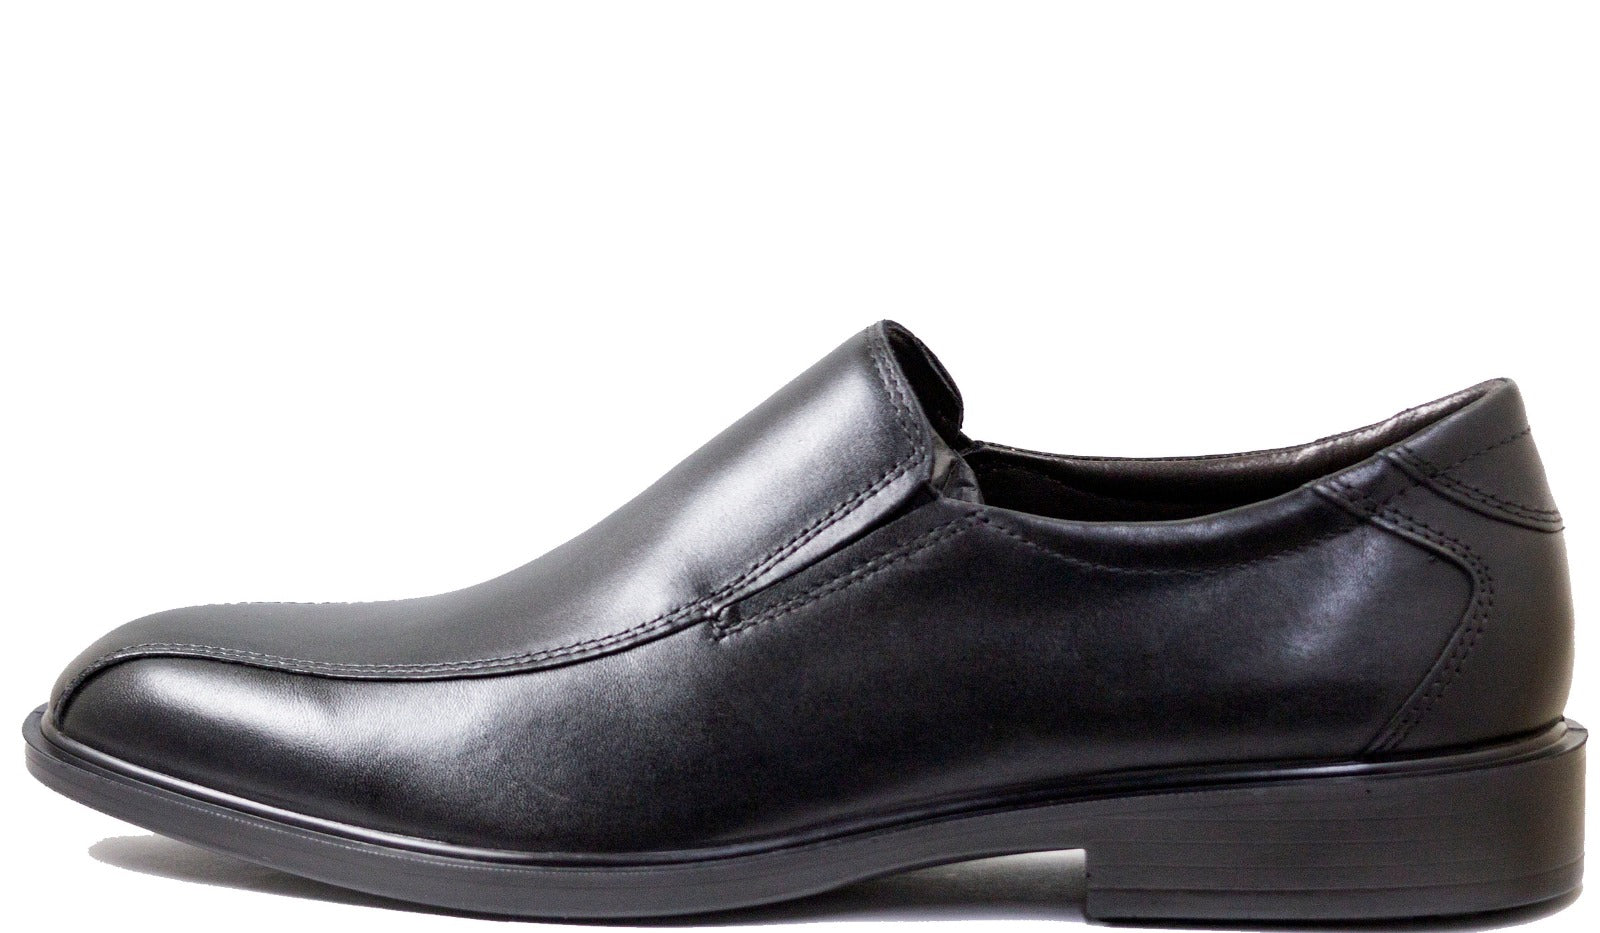 Sir Imperial Men's Black Dress Rubber Shoes 31011